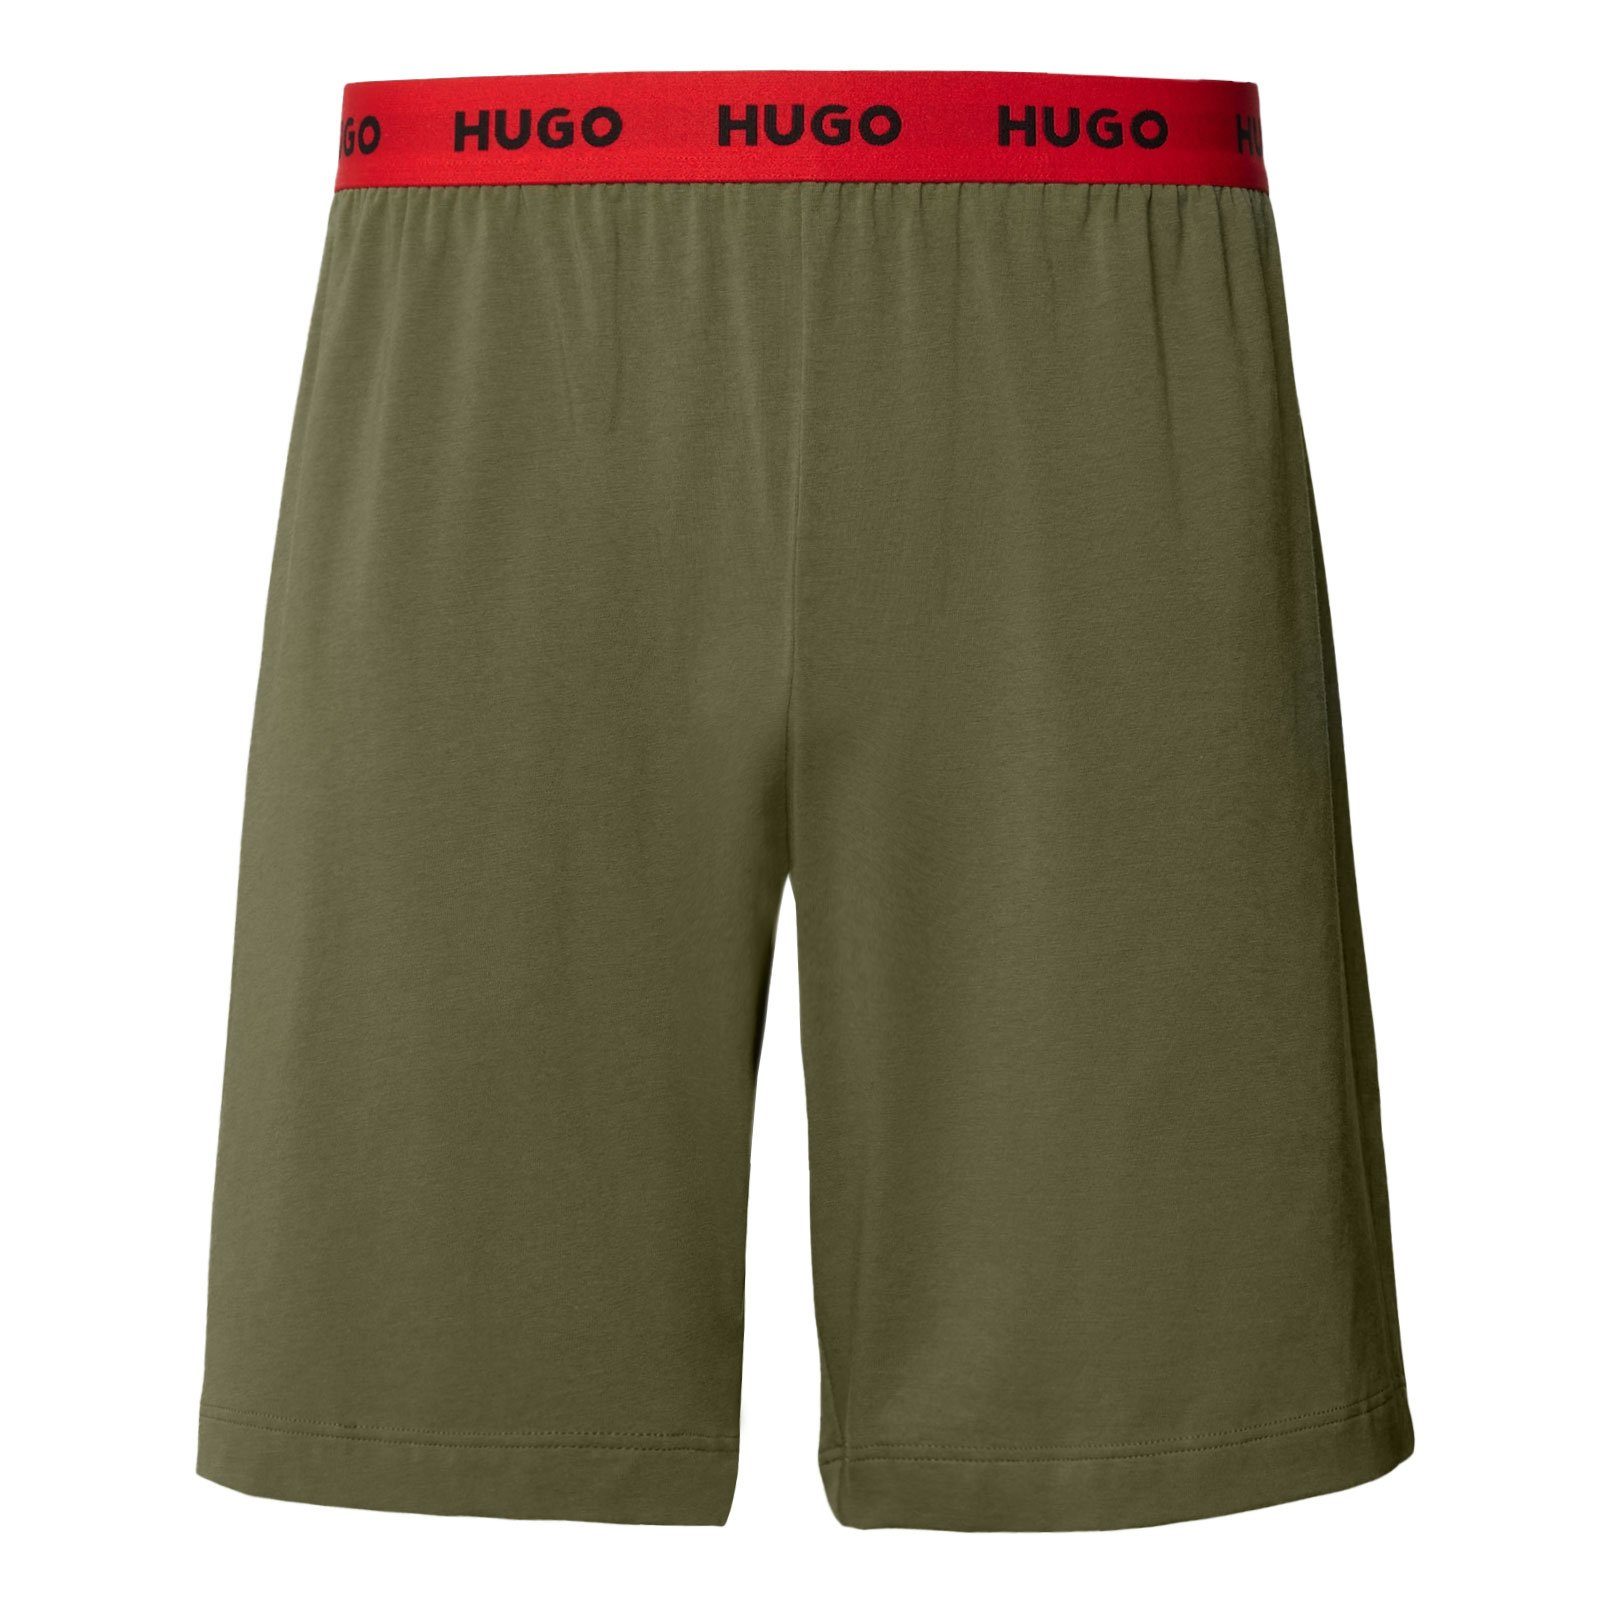 HUGO Pyjamashorts Linked Short Pant mit umlaufendem Markenschriftzug am Bund